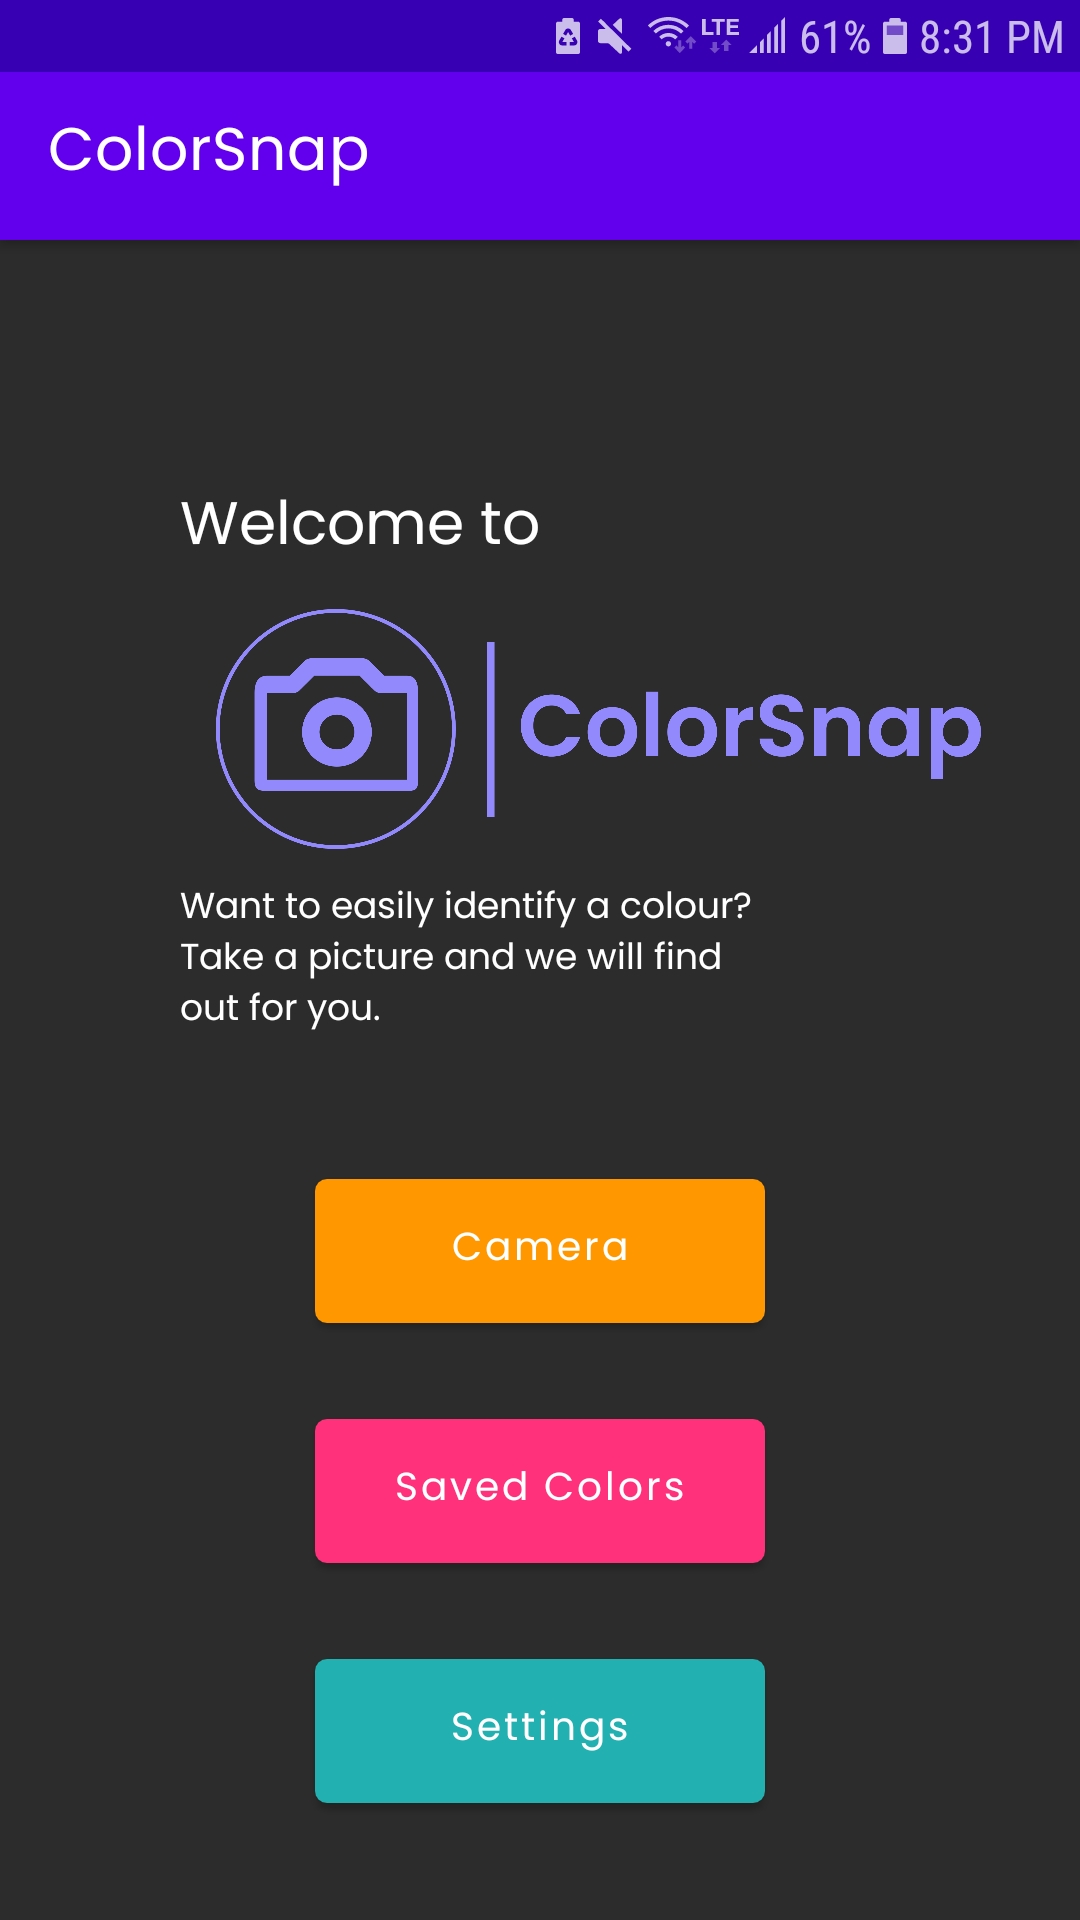 ColorSnap main menu